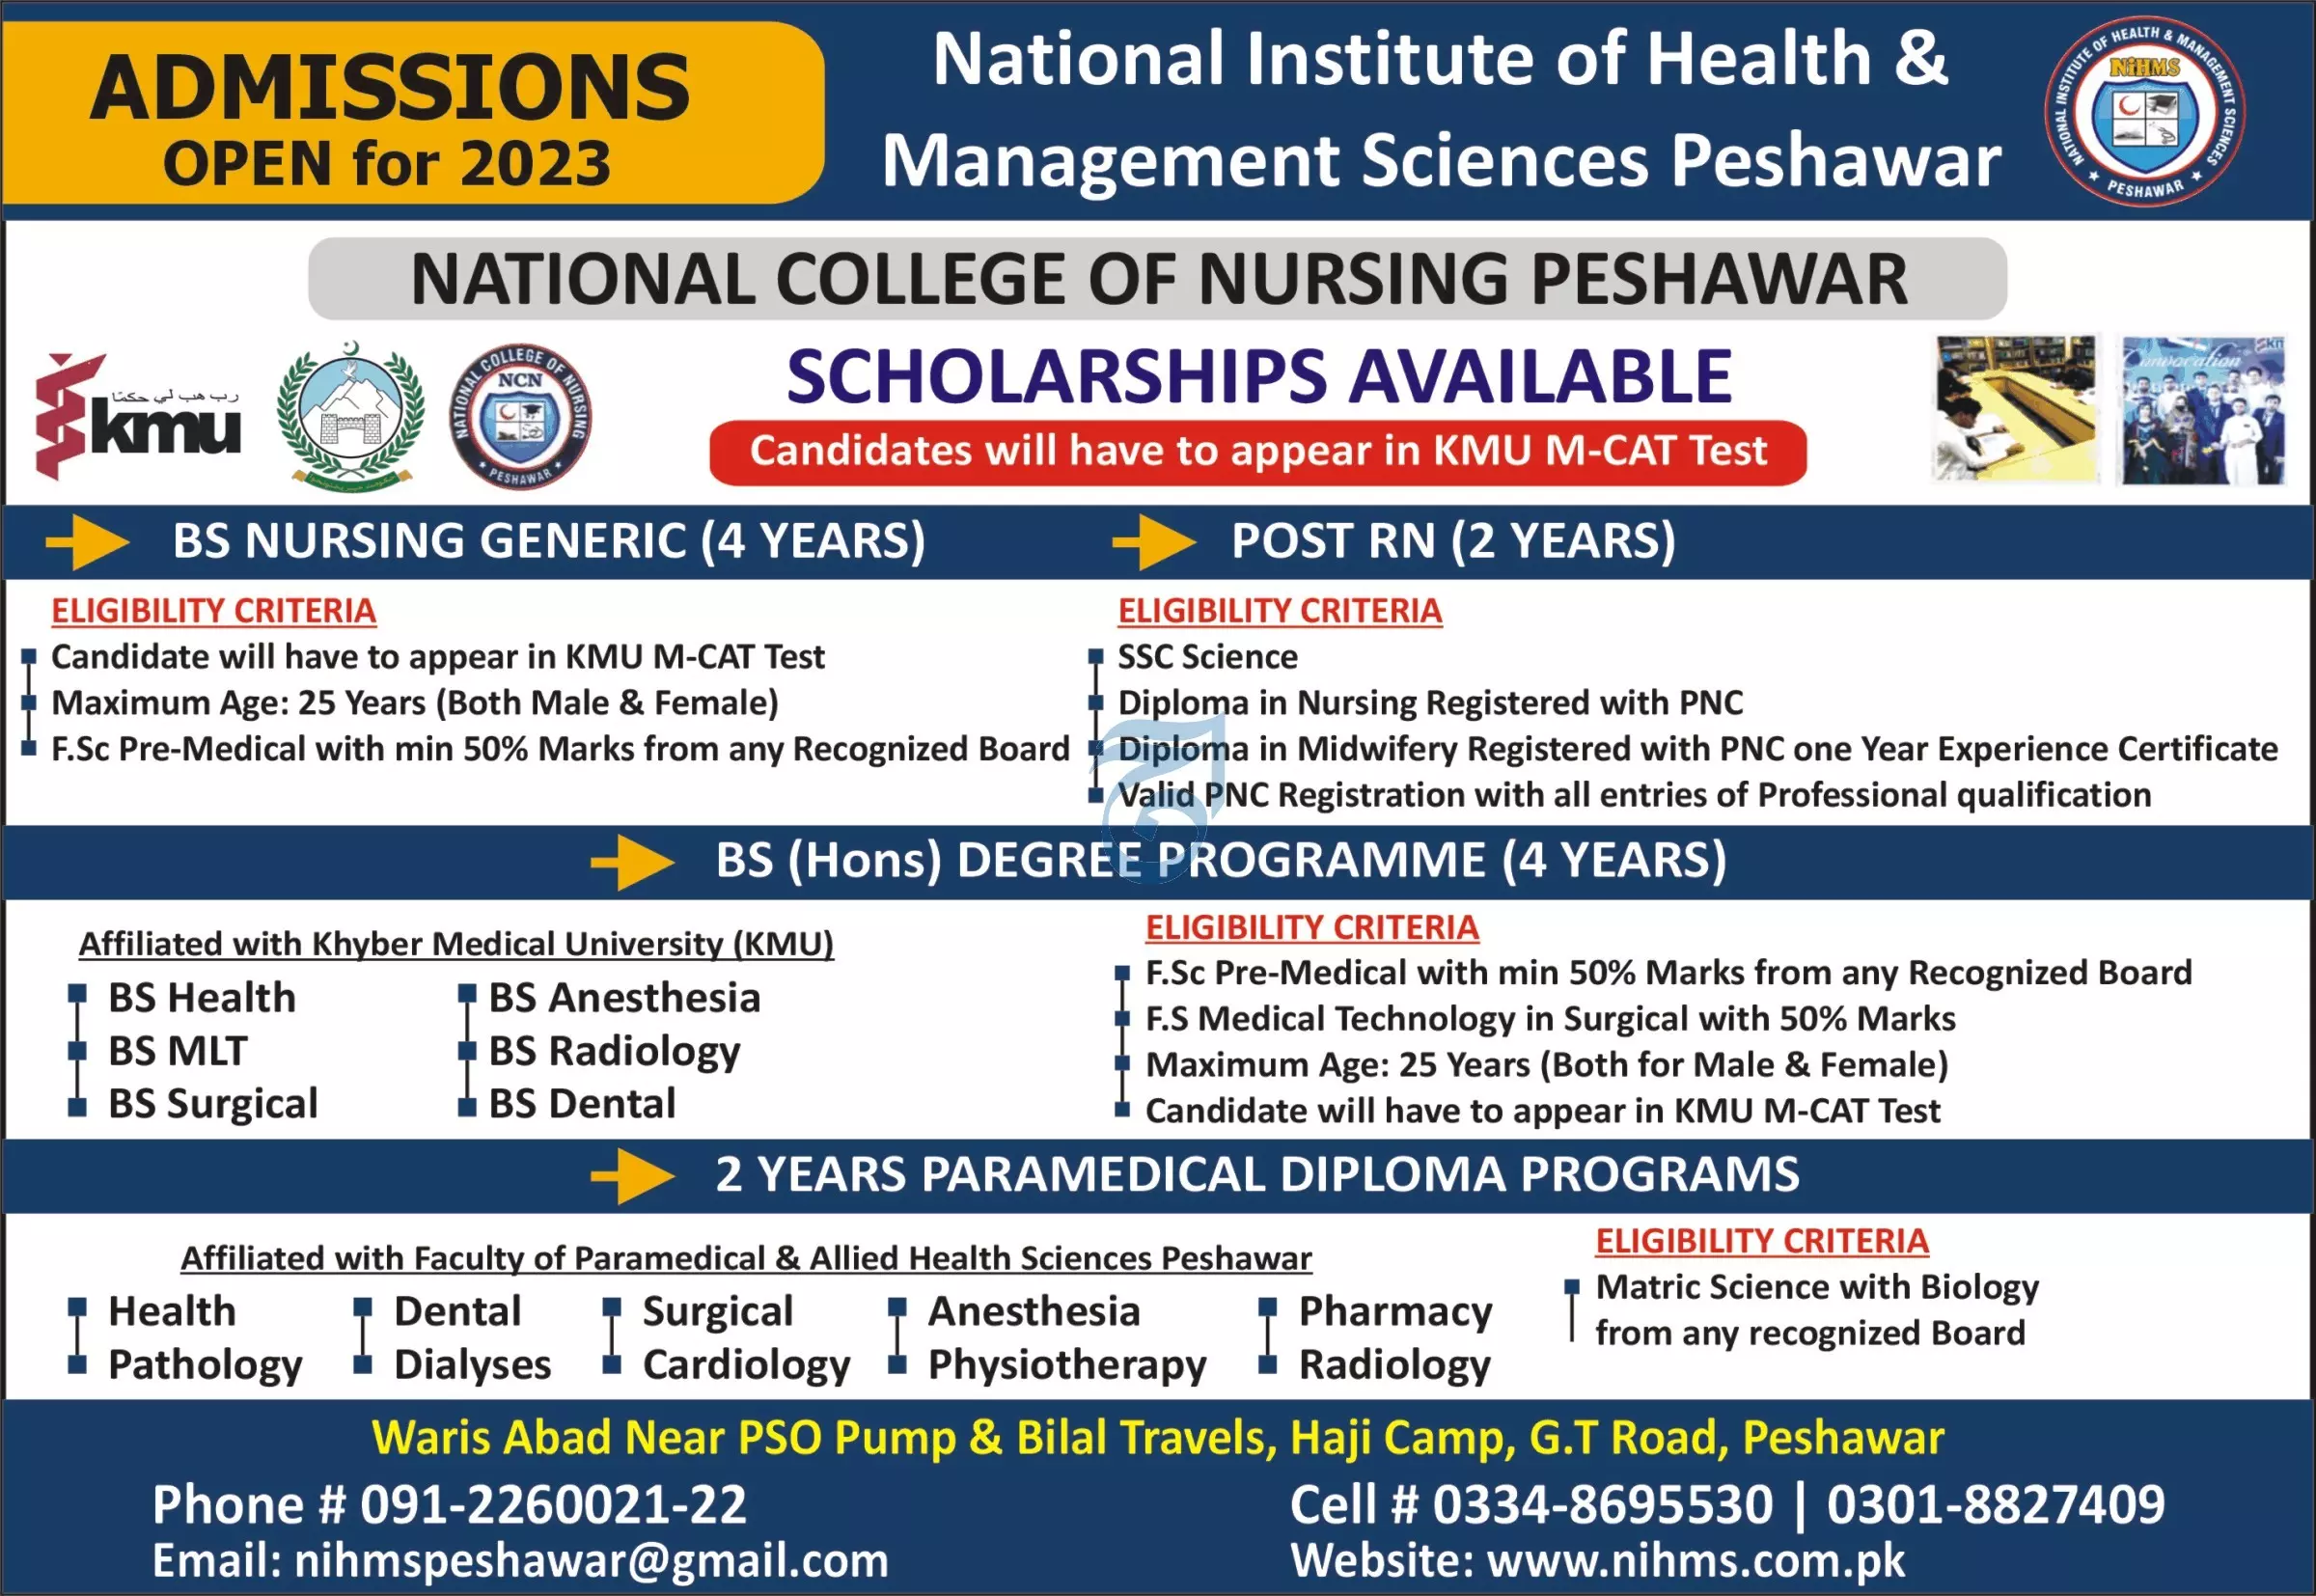 National Institute of Health & Management Sciences Admission